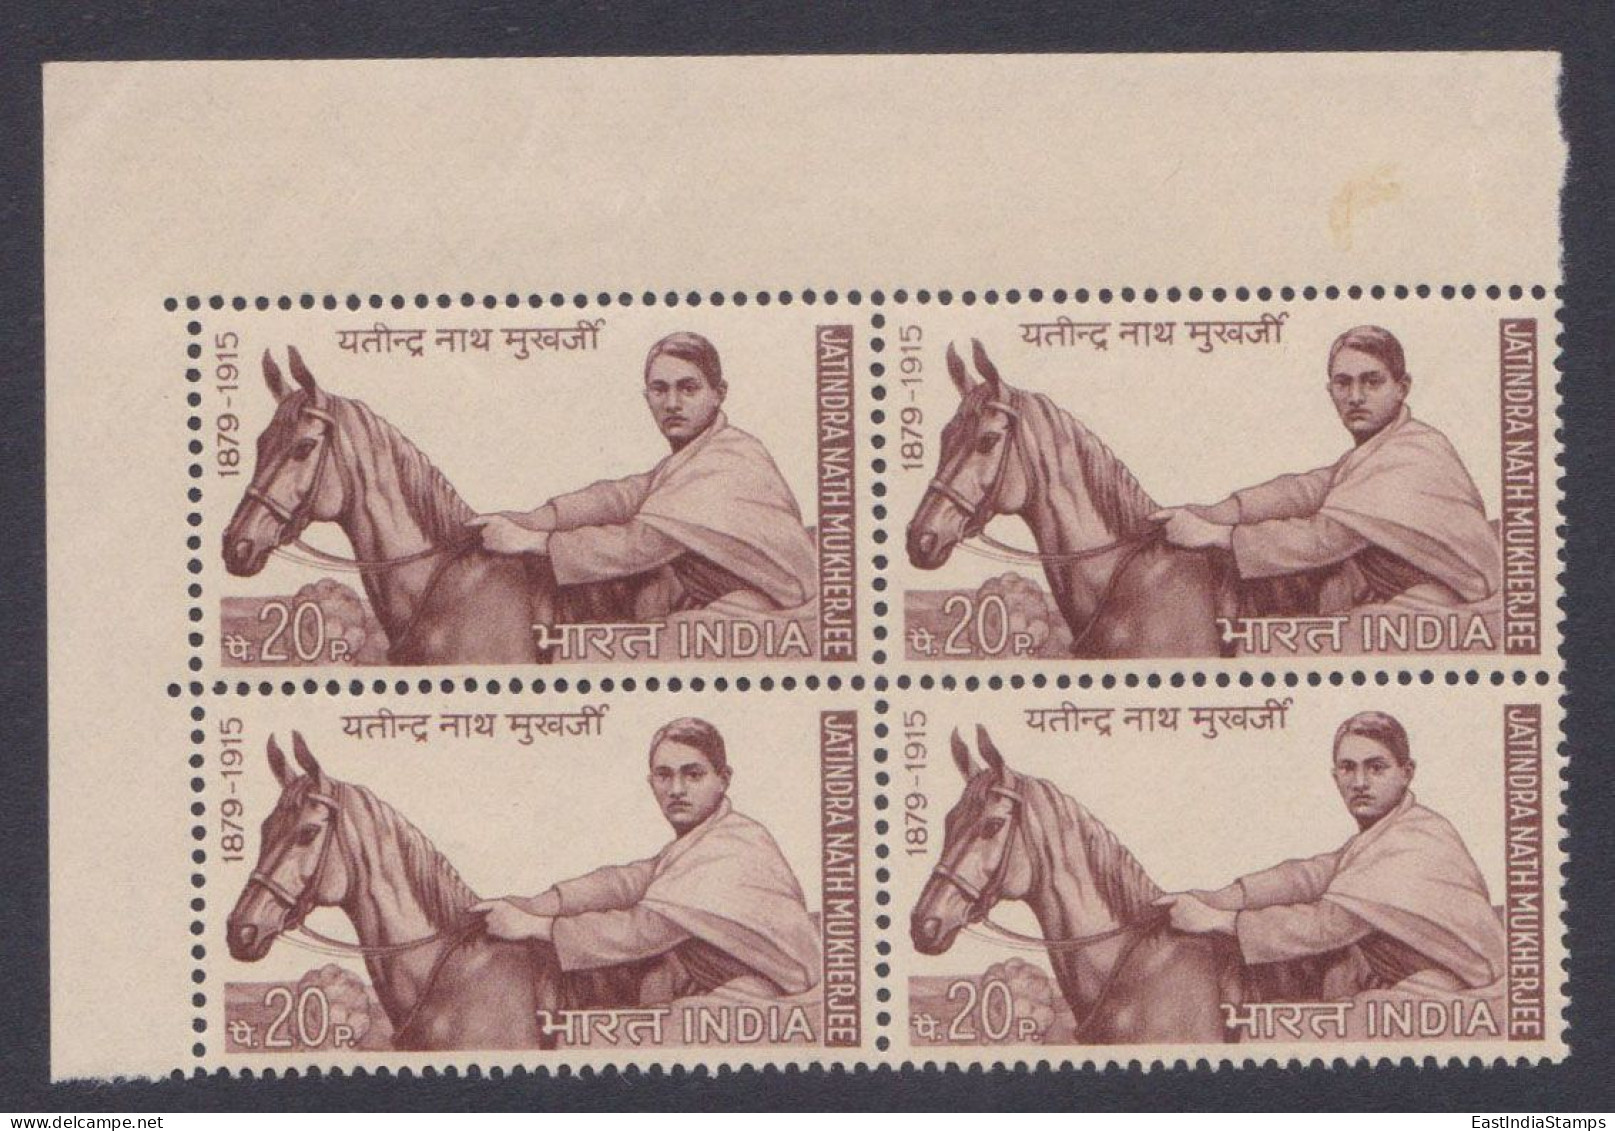 Inde India 1970 MNH Jatindra Nath Mukherjee, Bhaga Jatin, Indian Independence Activist, Horse, Horses, Block - Unused Stamps